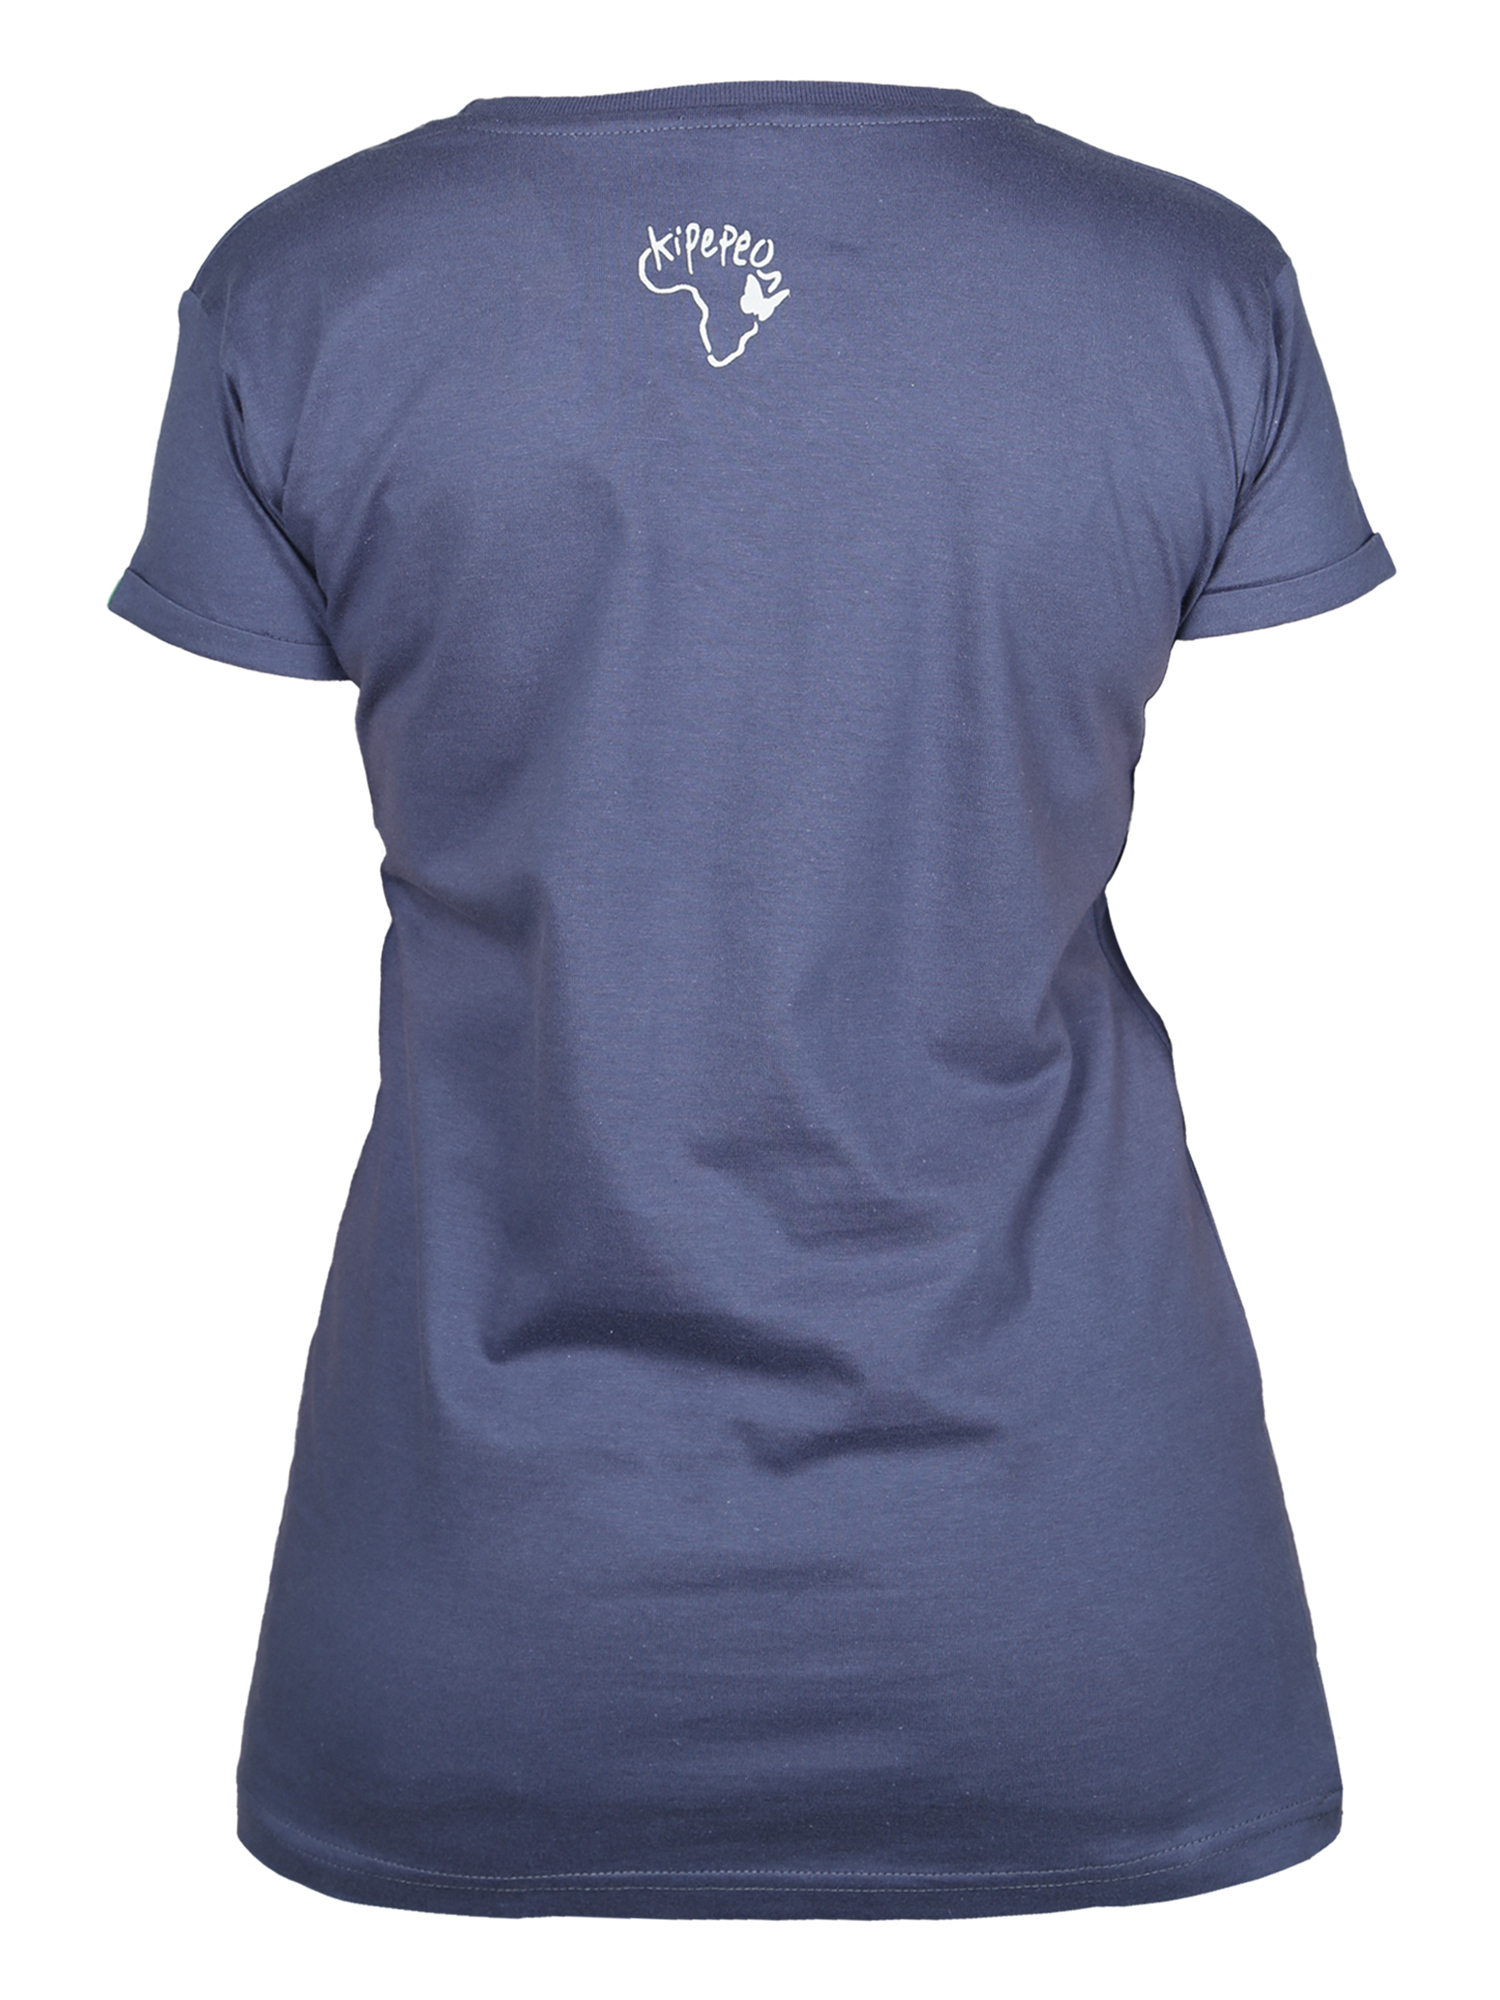 Kipepeo Clothing T-Shirt Shirt Elephant Charcoal in Blau 